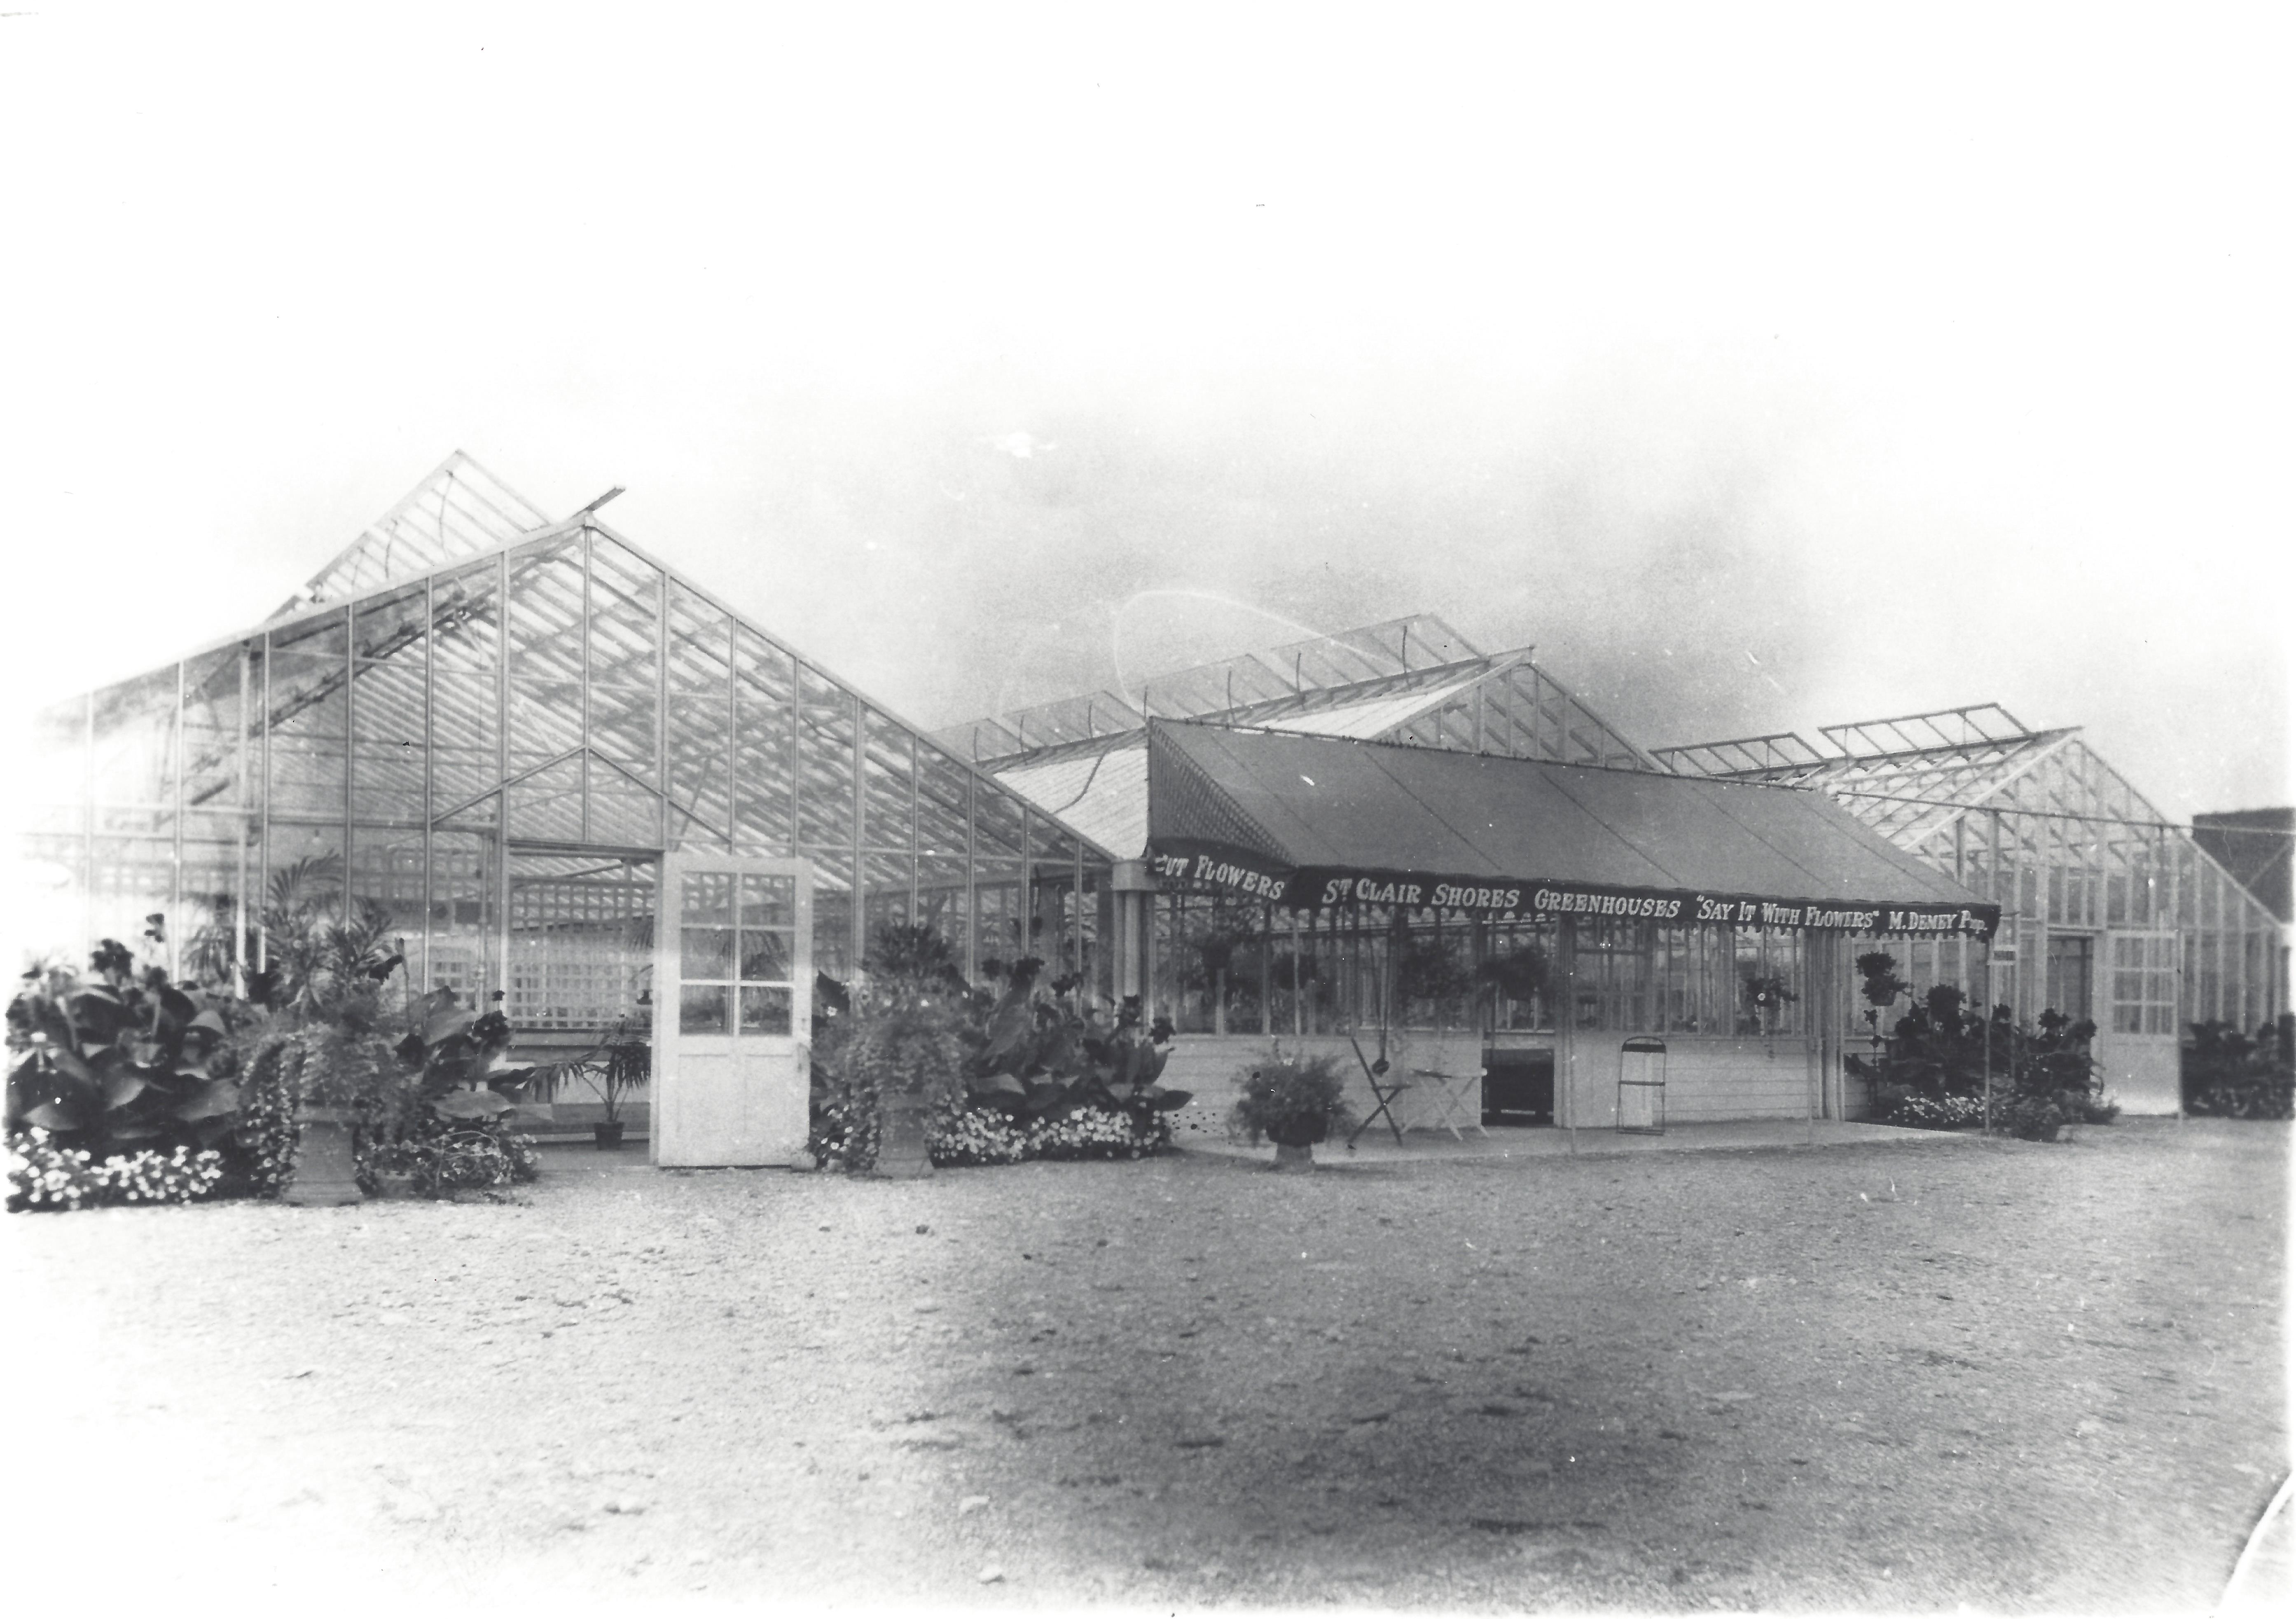 St. Clair Shores Greenhouses